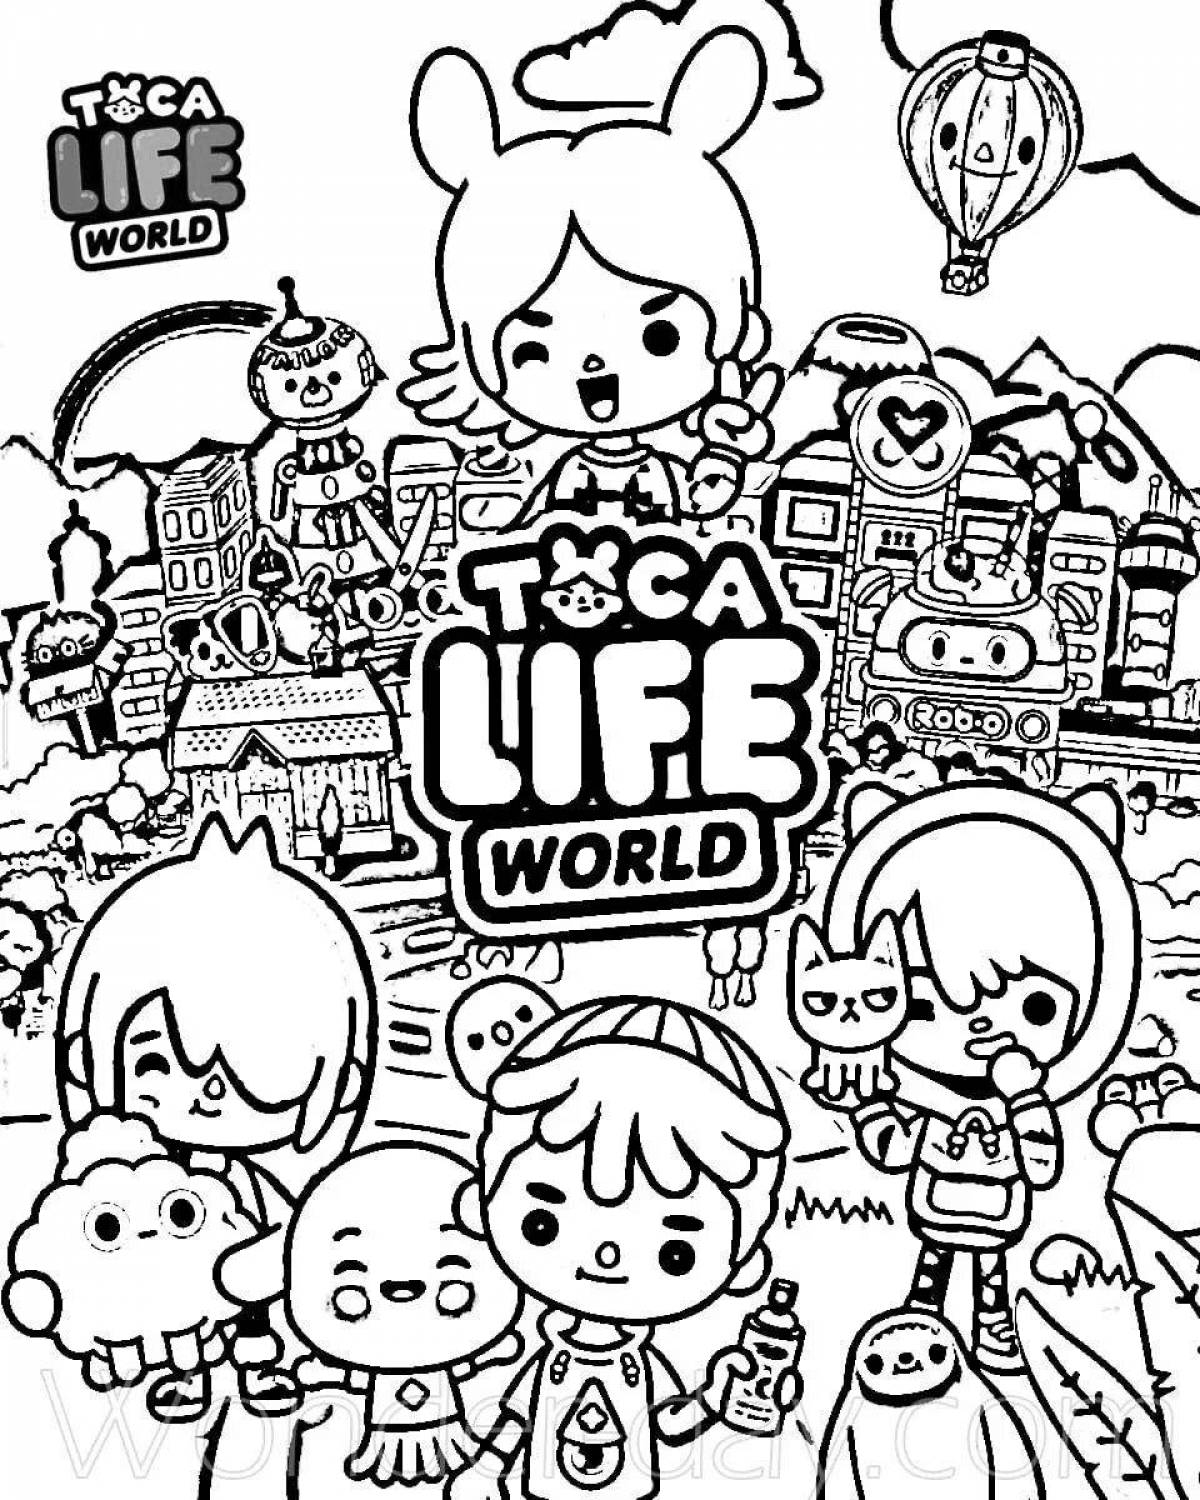 Toca life world #4